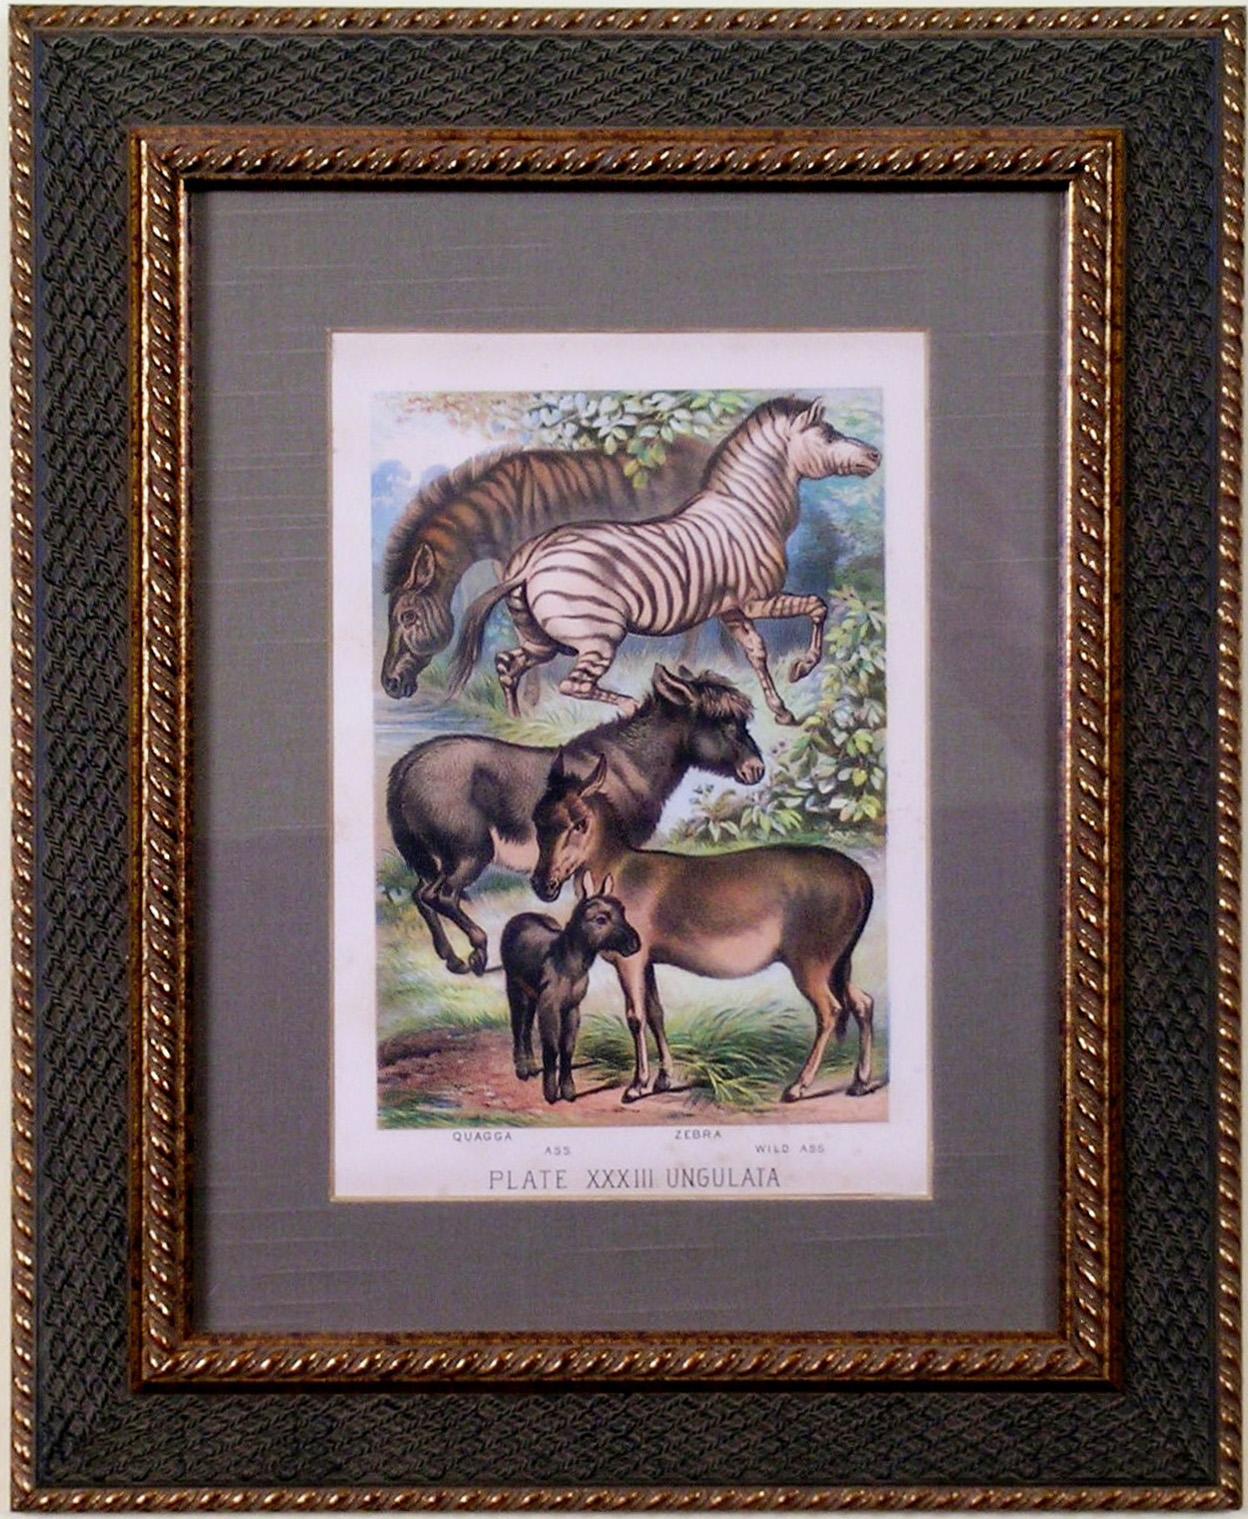 Plate XXXIII.  Ungulata.  Quagga, Ass, Zebra, Wild Ass - Print by Henry J. Johnson